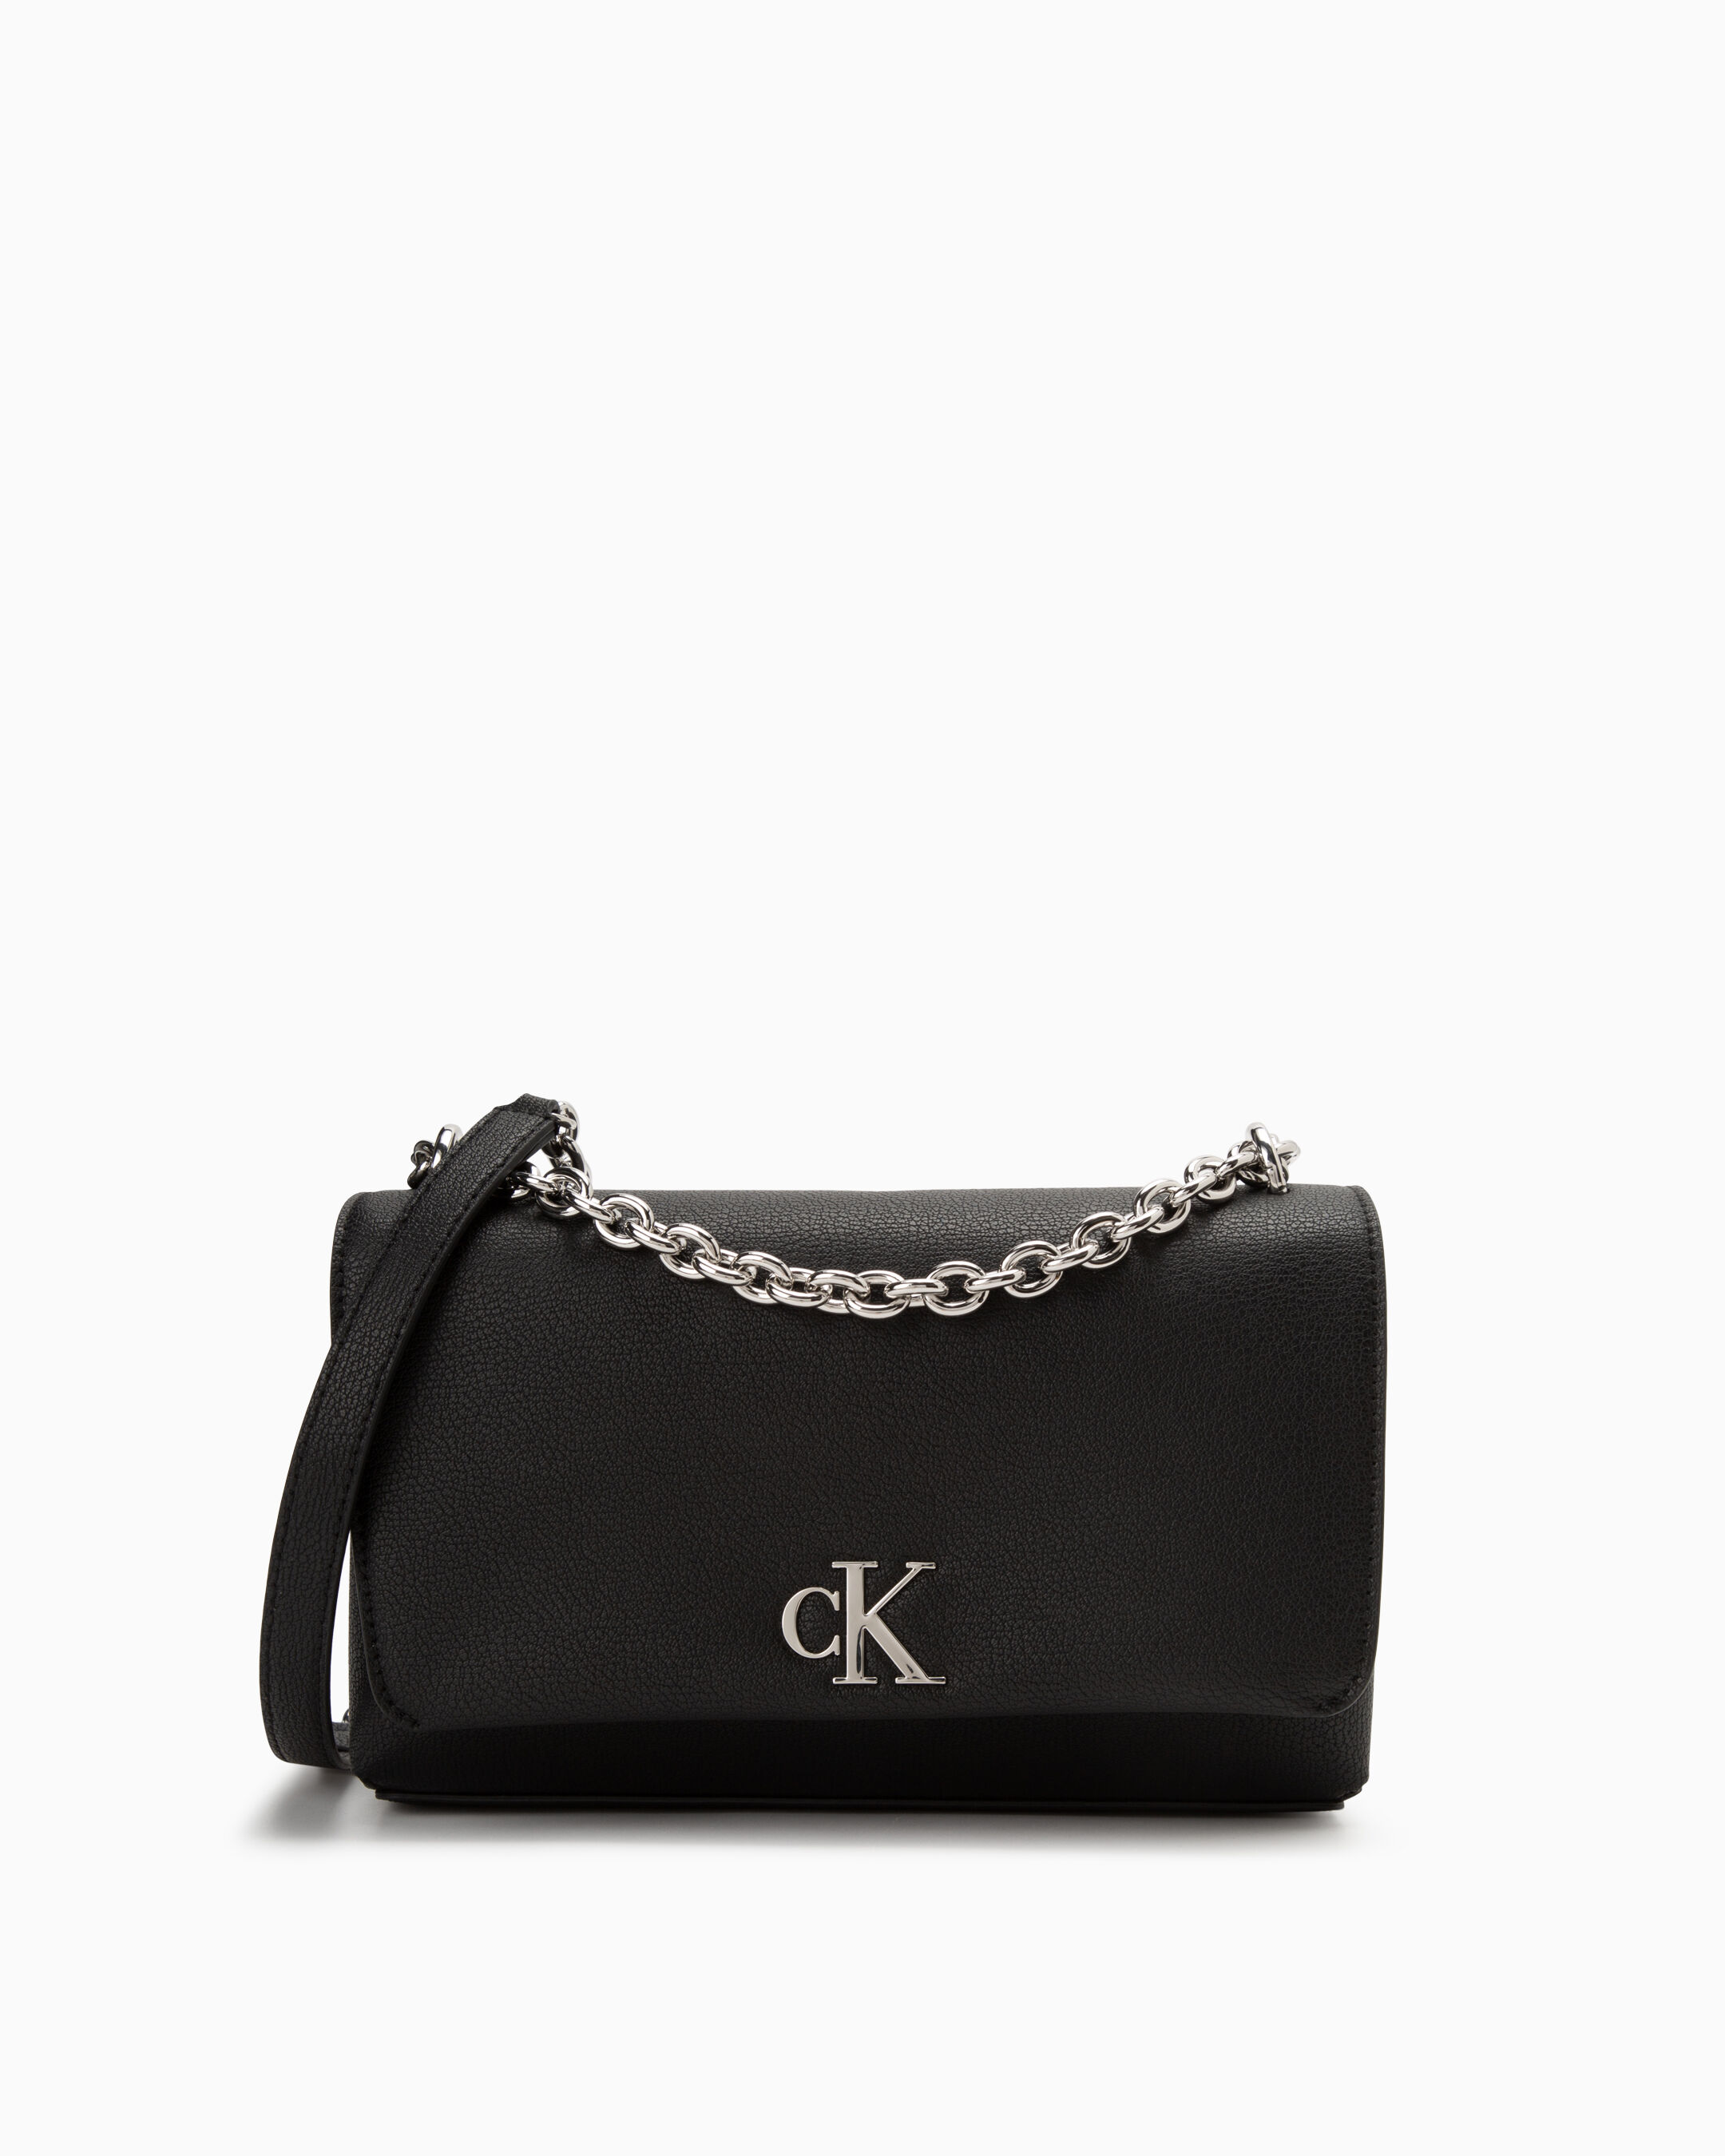 Brand New Women's Small CALVIN KLEIN Wallet / Handbag | eBay